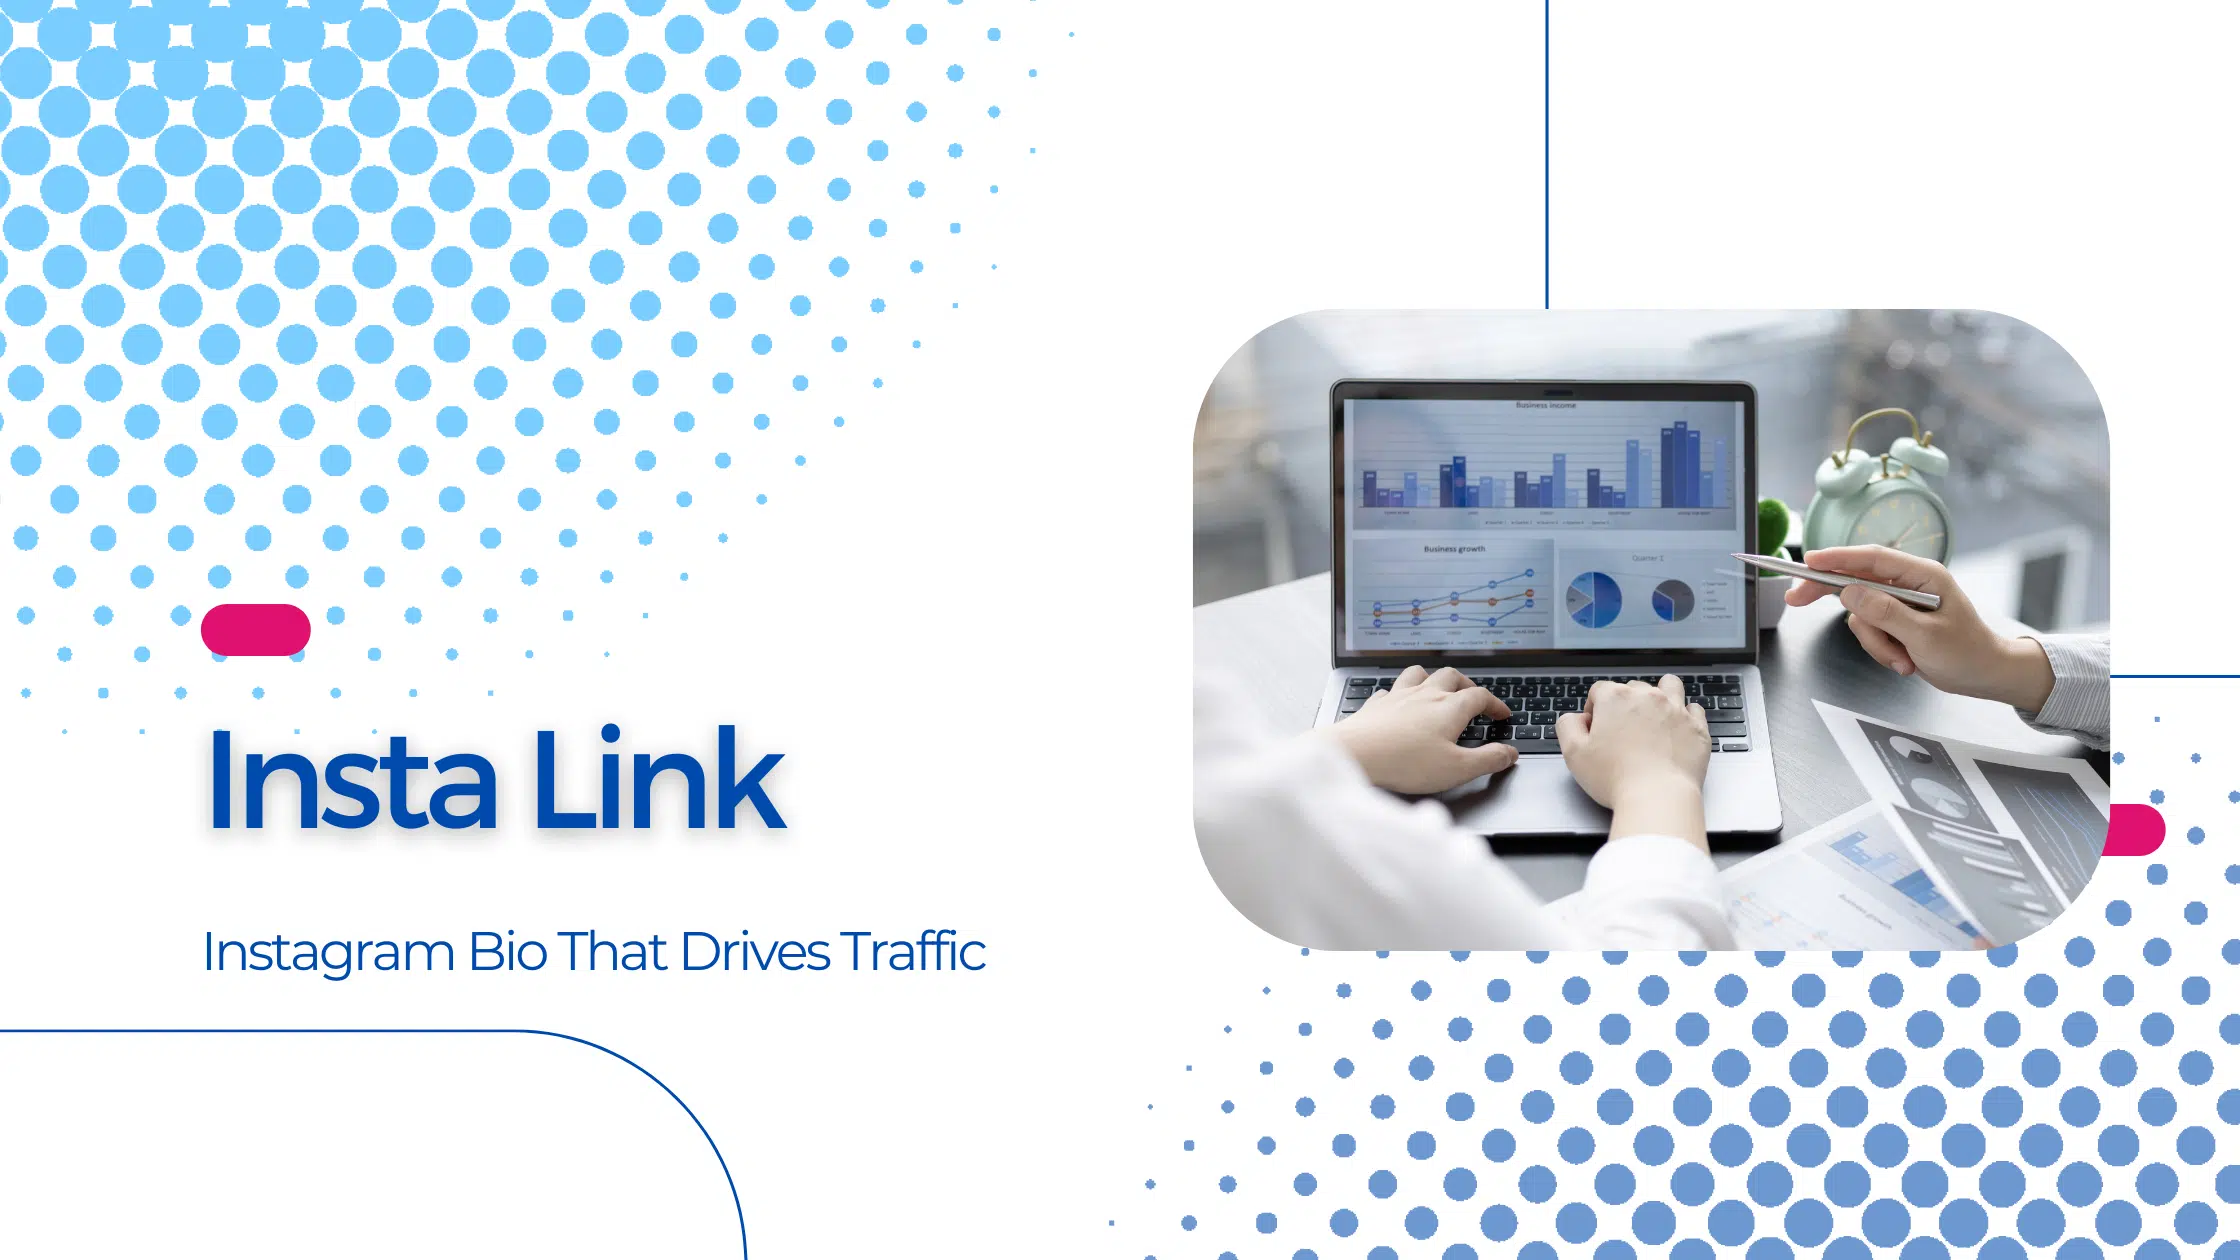 Insta Link Instagram bio that drives traffic